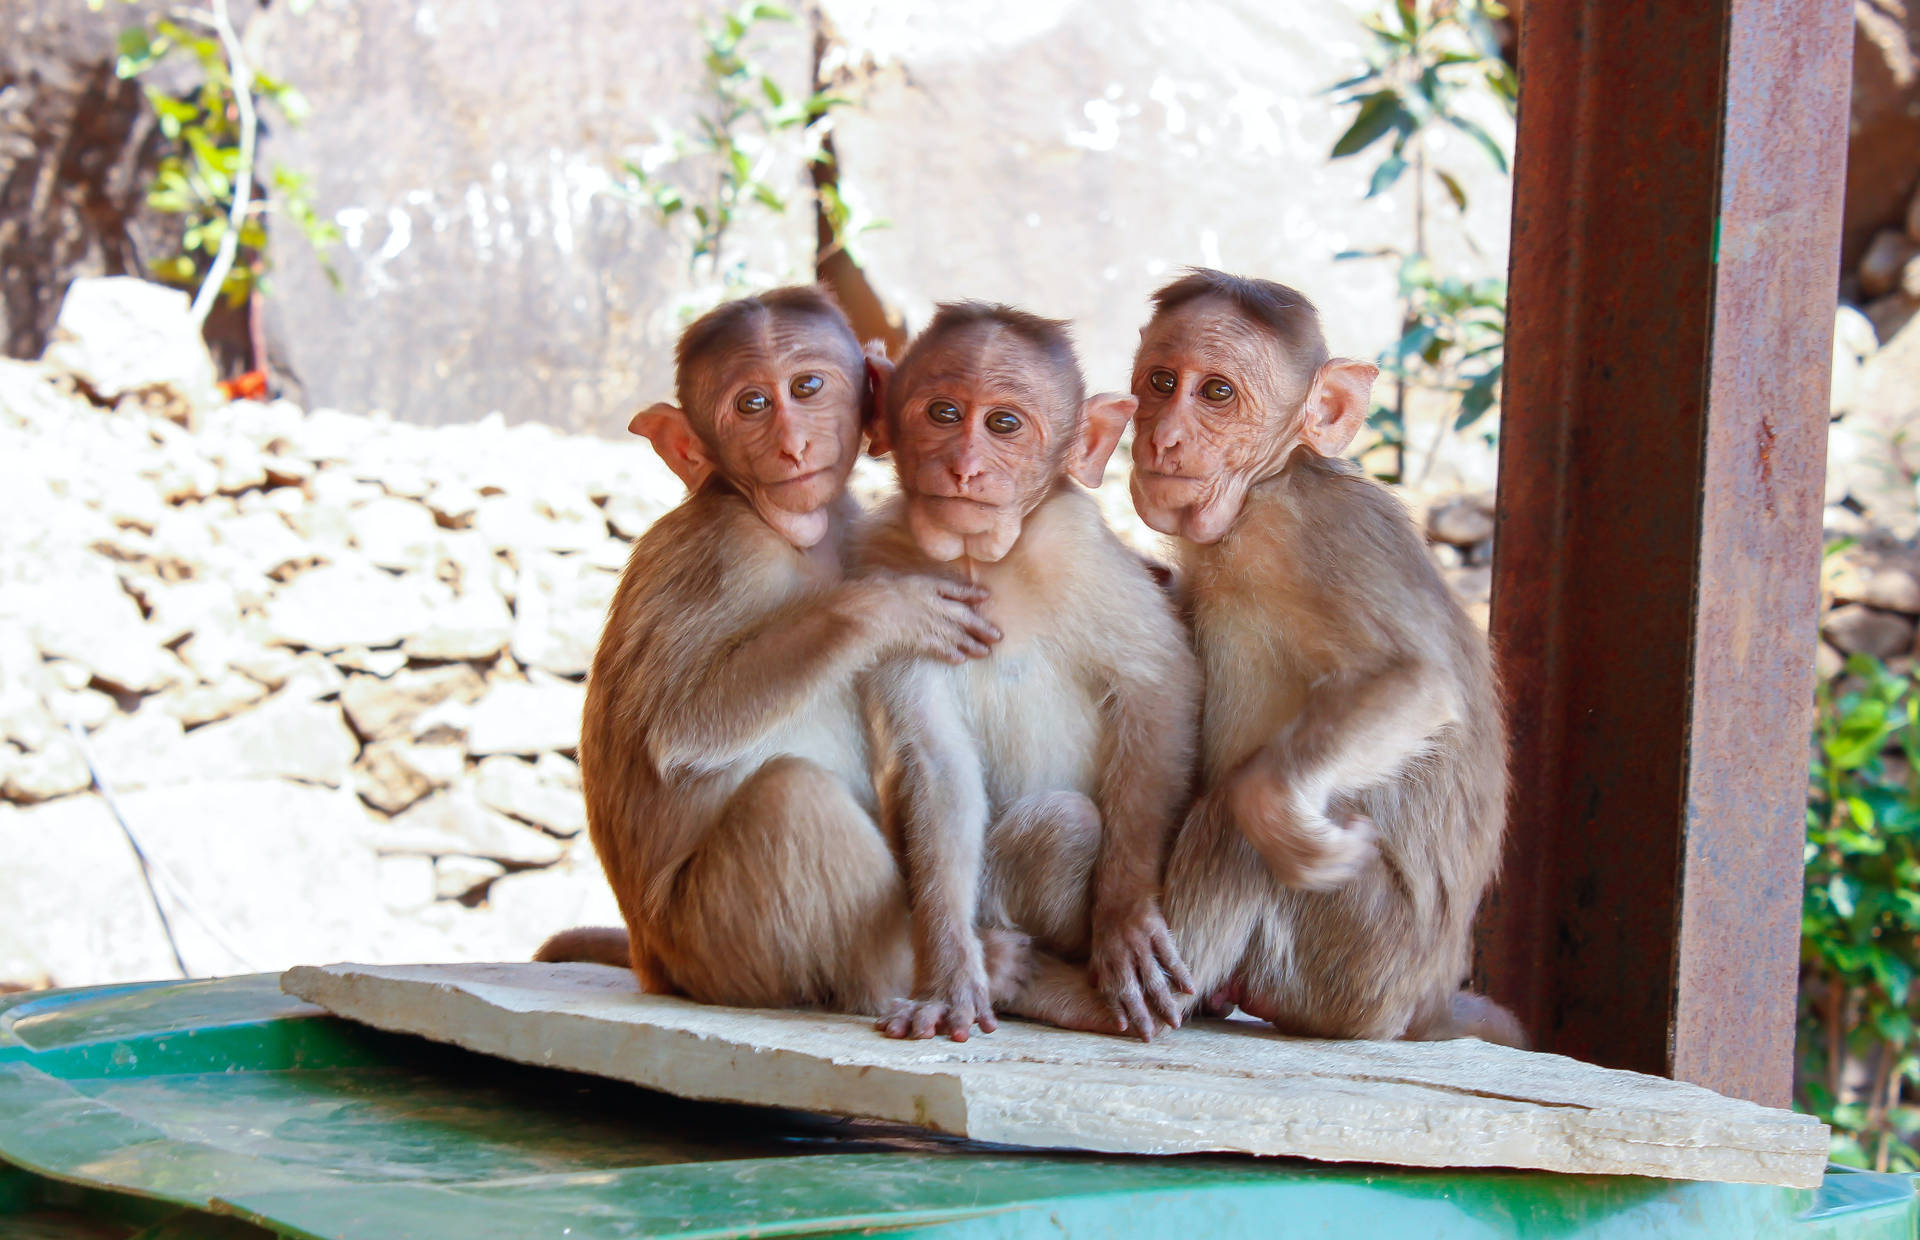 Three Adorable Baby Monkeys Cuddling Together